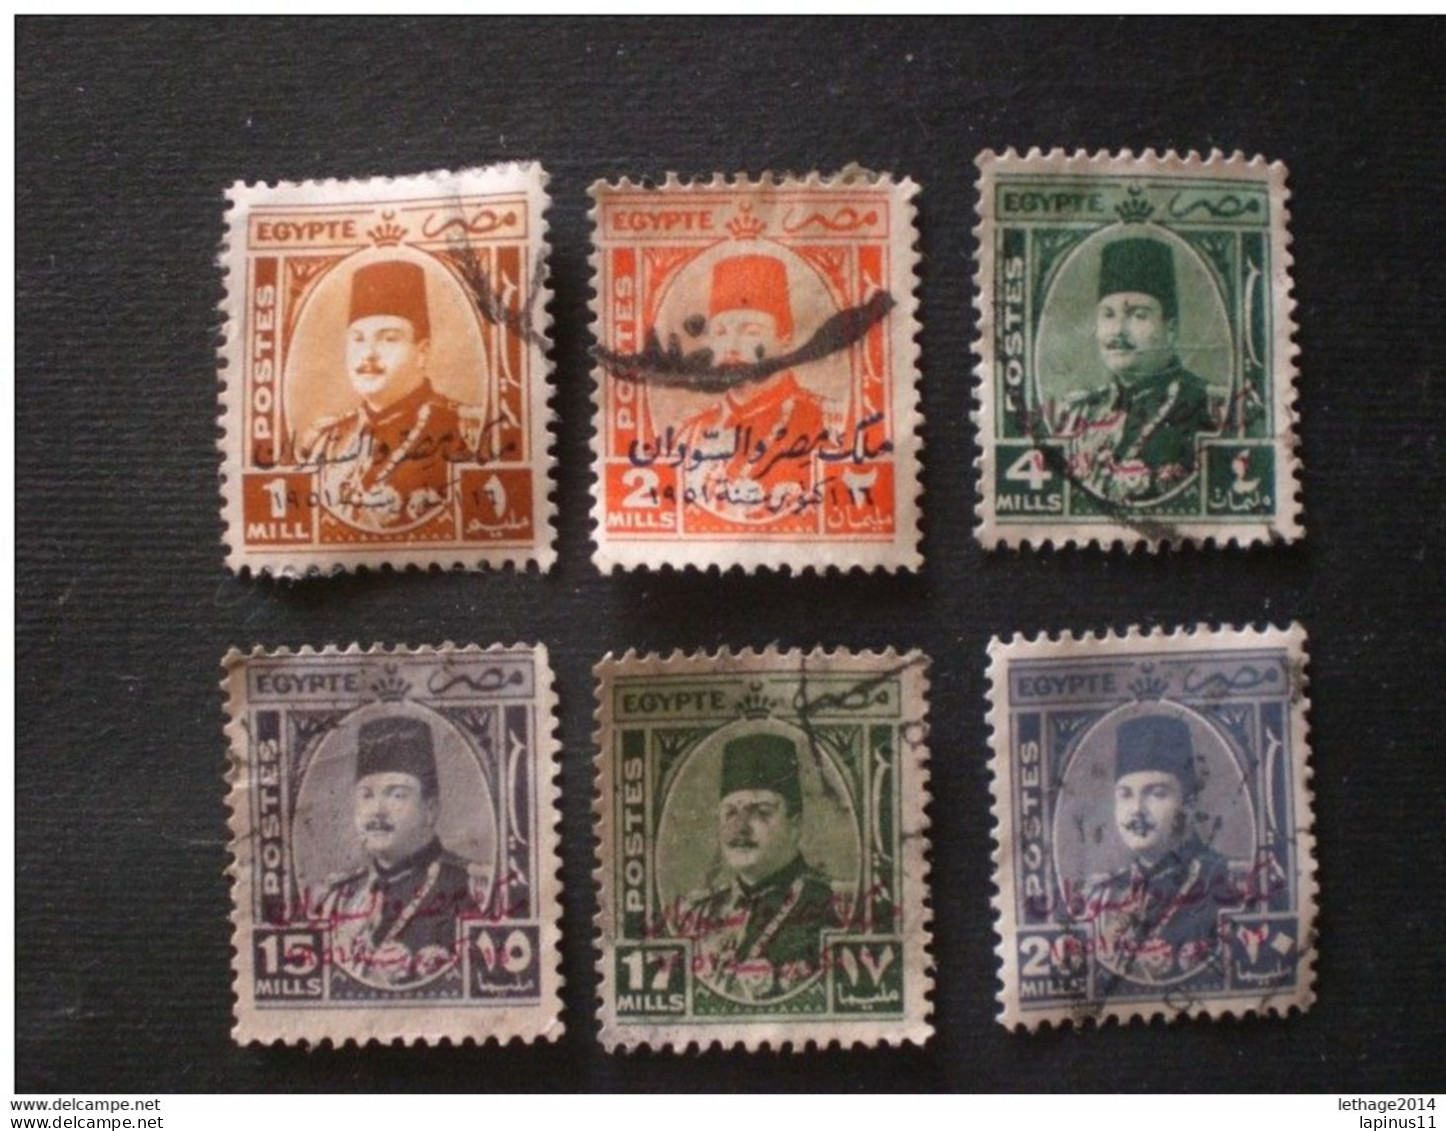 EGYPT 1948 King Farouk - Egypt Postage Stamps Of 1951 Overprinted "SUDAN" In Arabic RARE - Usados